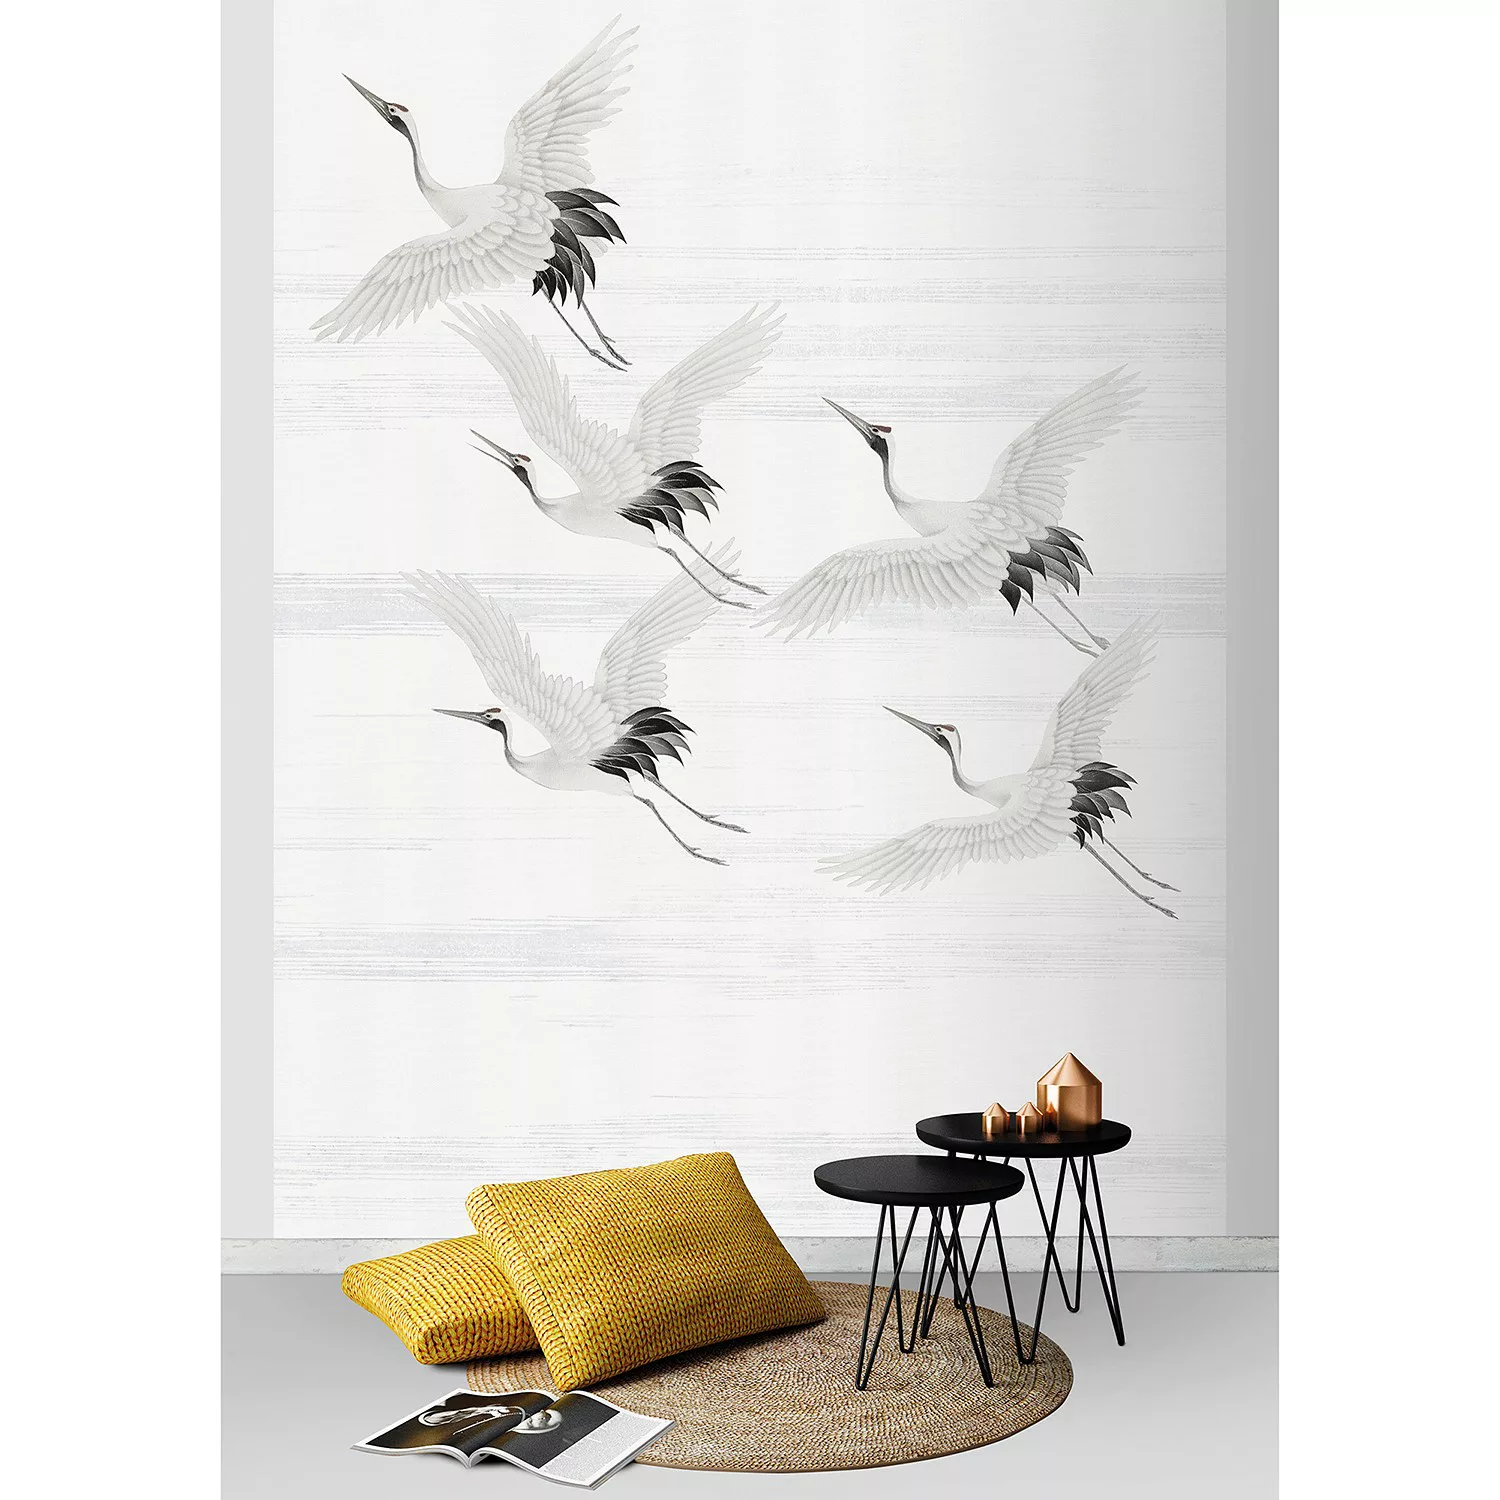 Art for the Home Fototapete Kraanvogels  280 x 200 cm günstig online kaufen